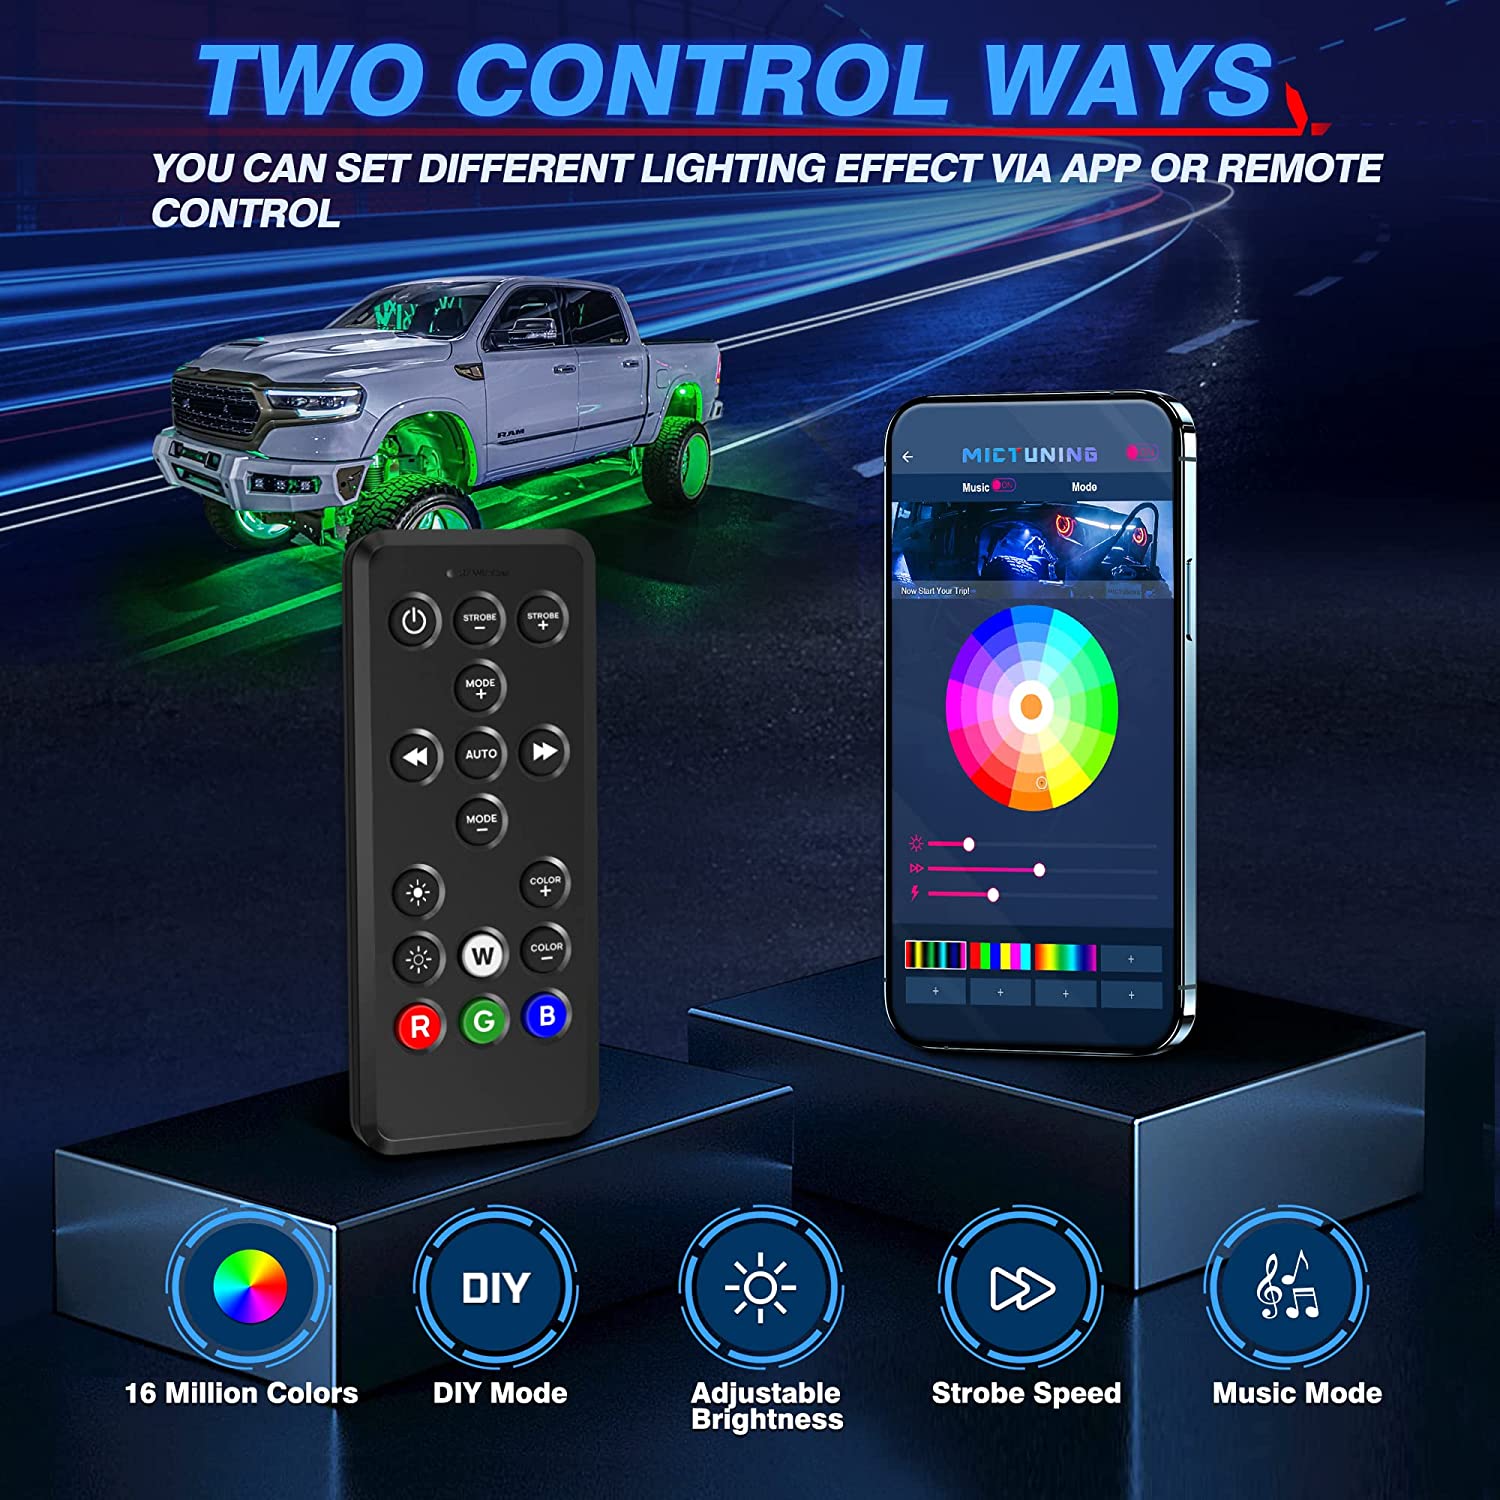 Newest Q1 RGBW LED Rock Lights - 12 Pods  Neon LED Light Kit for Truck